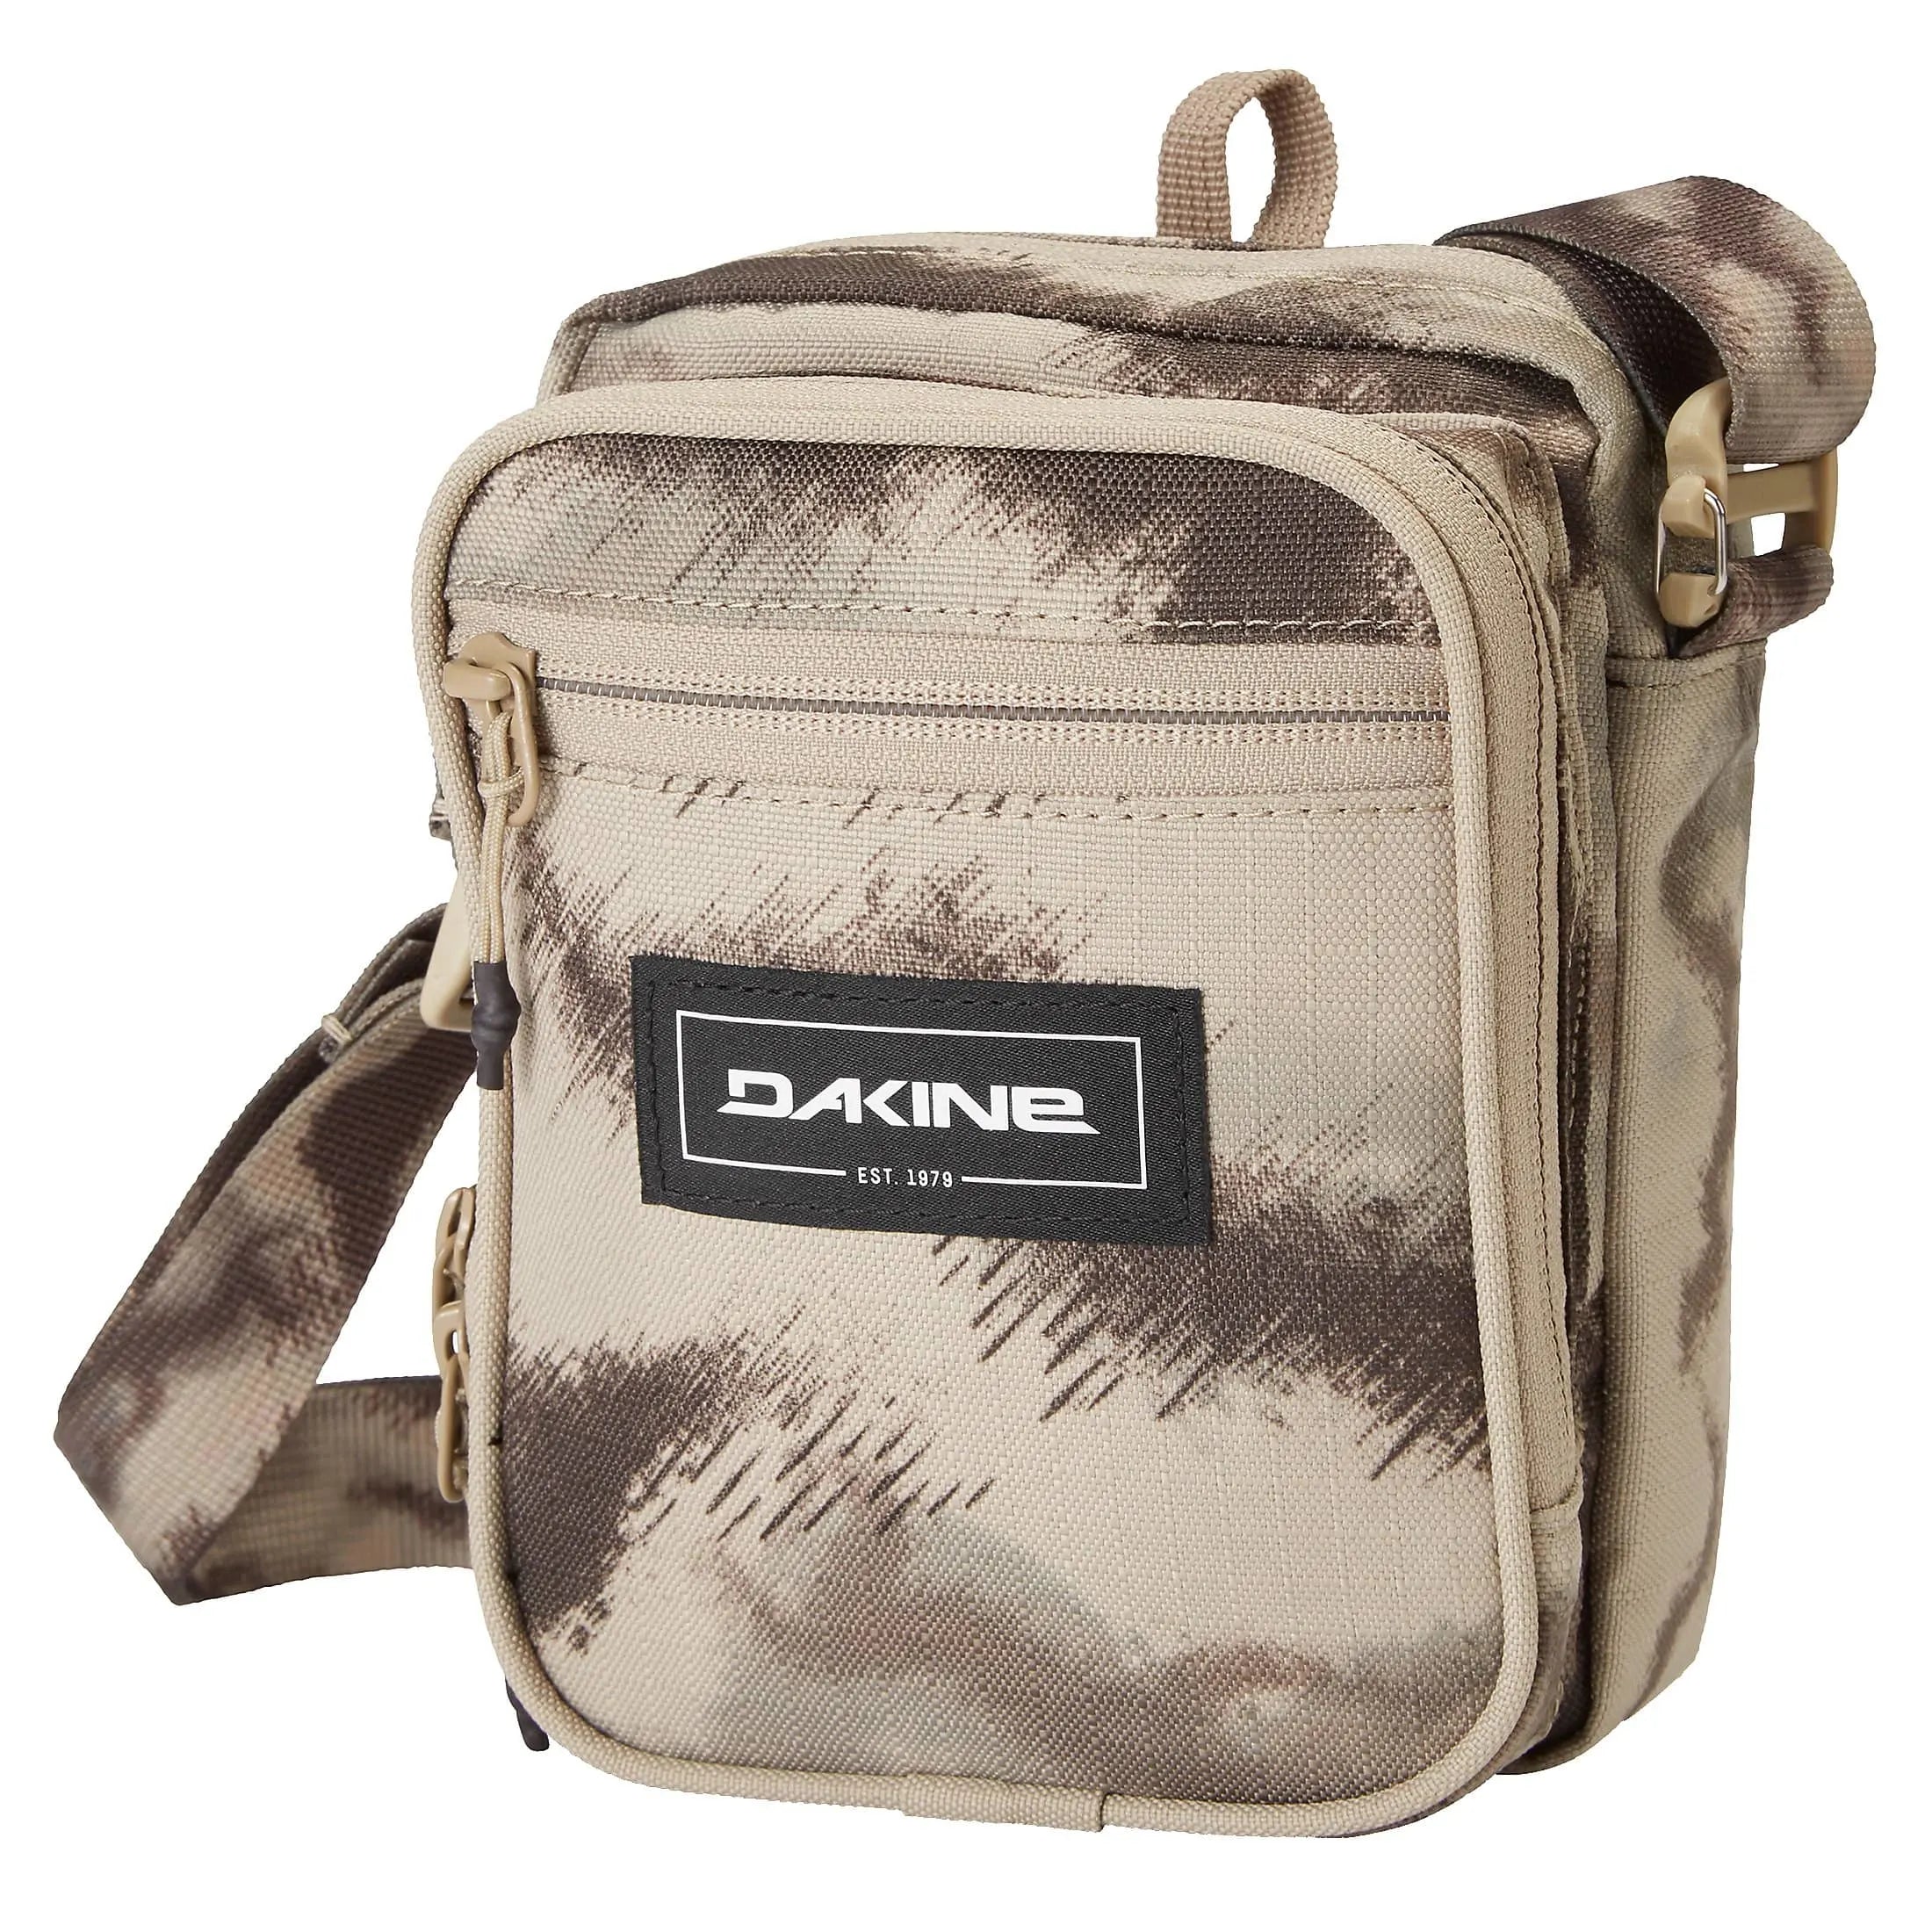 Dakine Packs & Bags Field Bag Handbag 18 cm - ashcroft black jersey